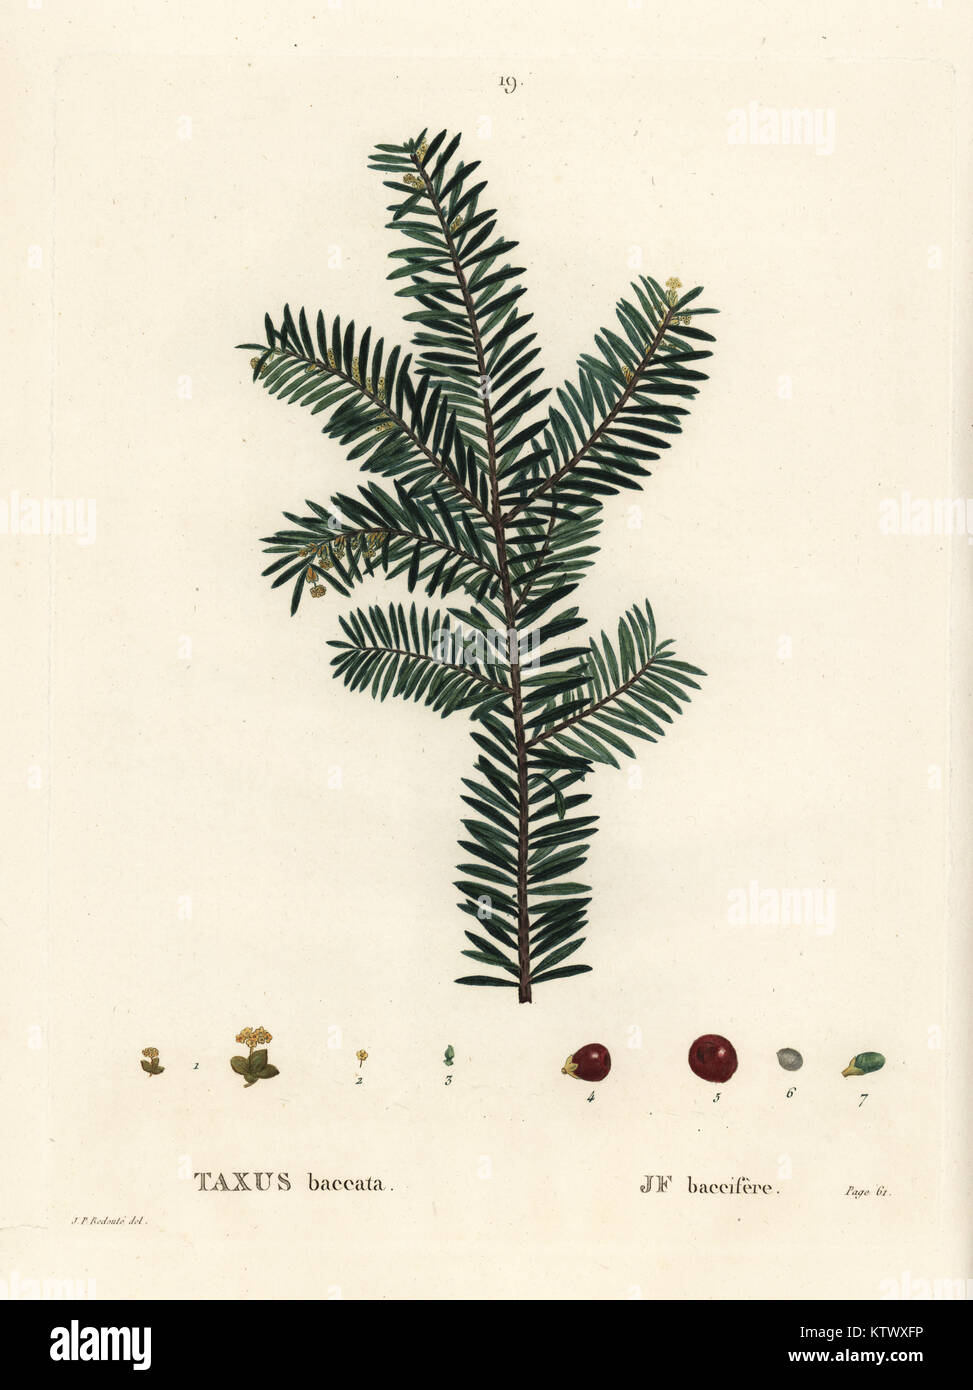 Botanical illustration of yew hi-res stock photography and images - Alamy